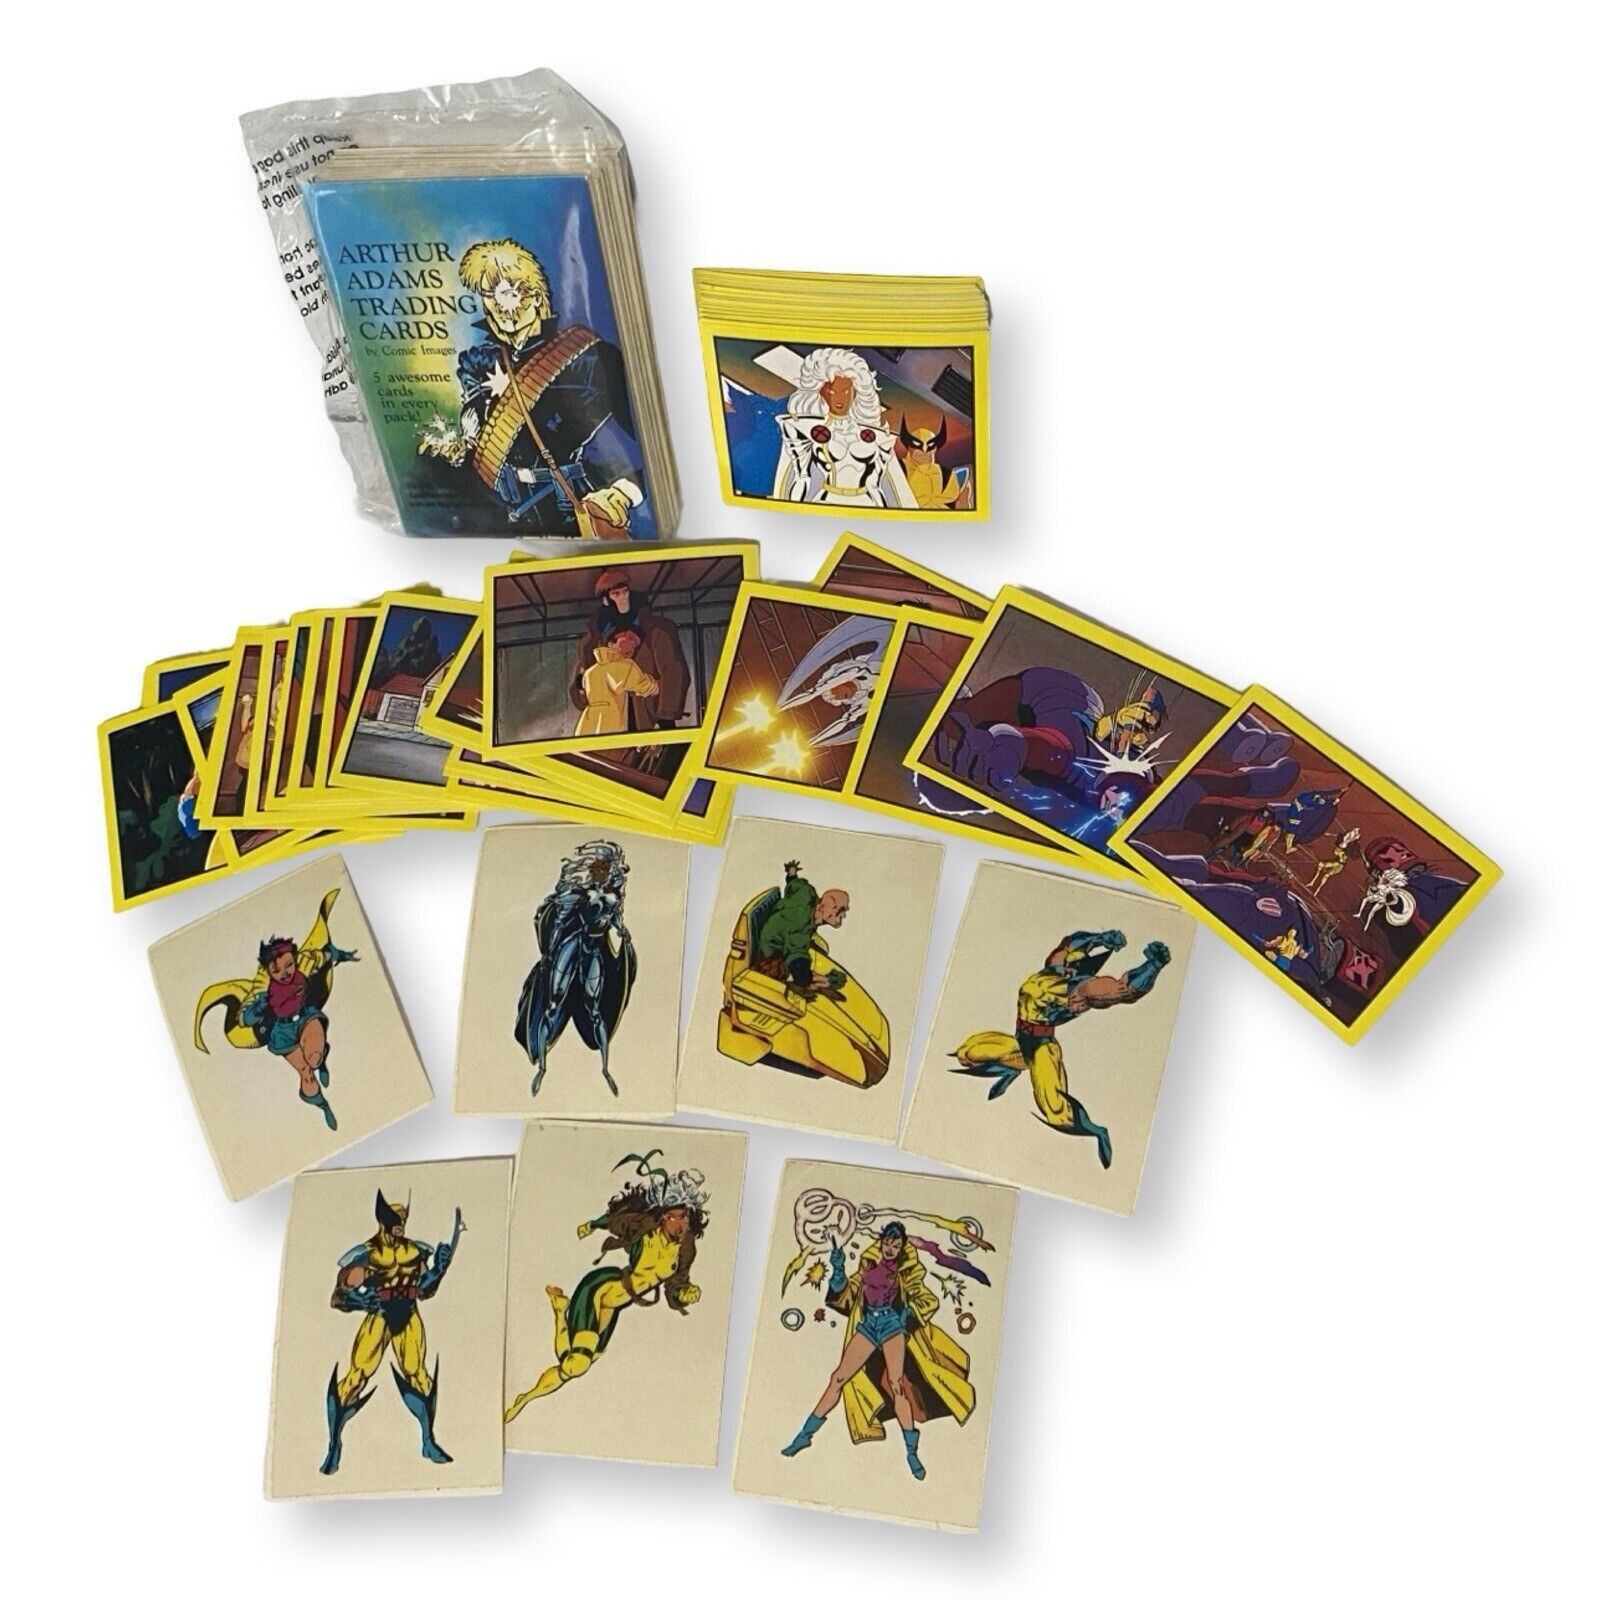 VTG 80s/90s Art Adams X-Men Cards Jim Lee Tattoos & Series Stickers 100+ Pcs EUC